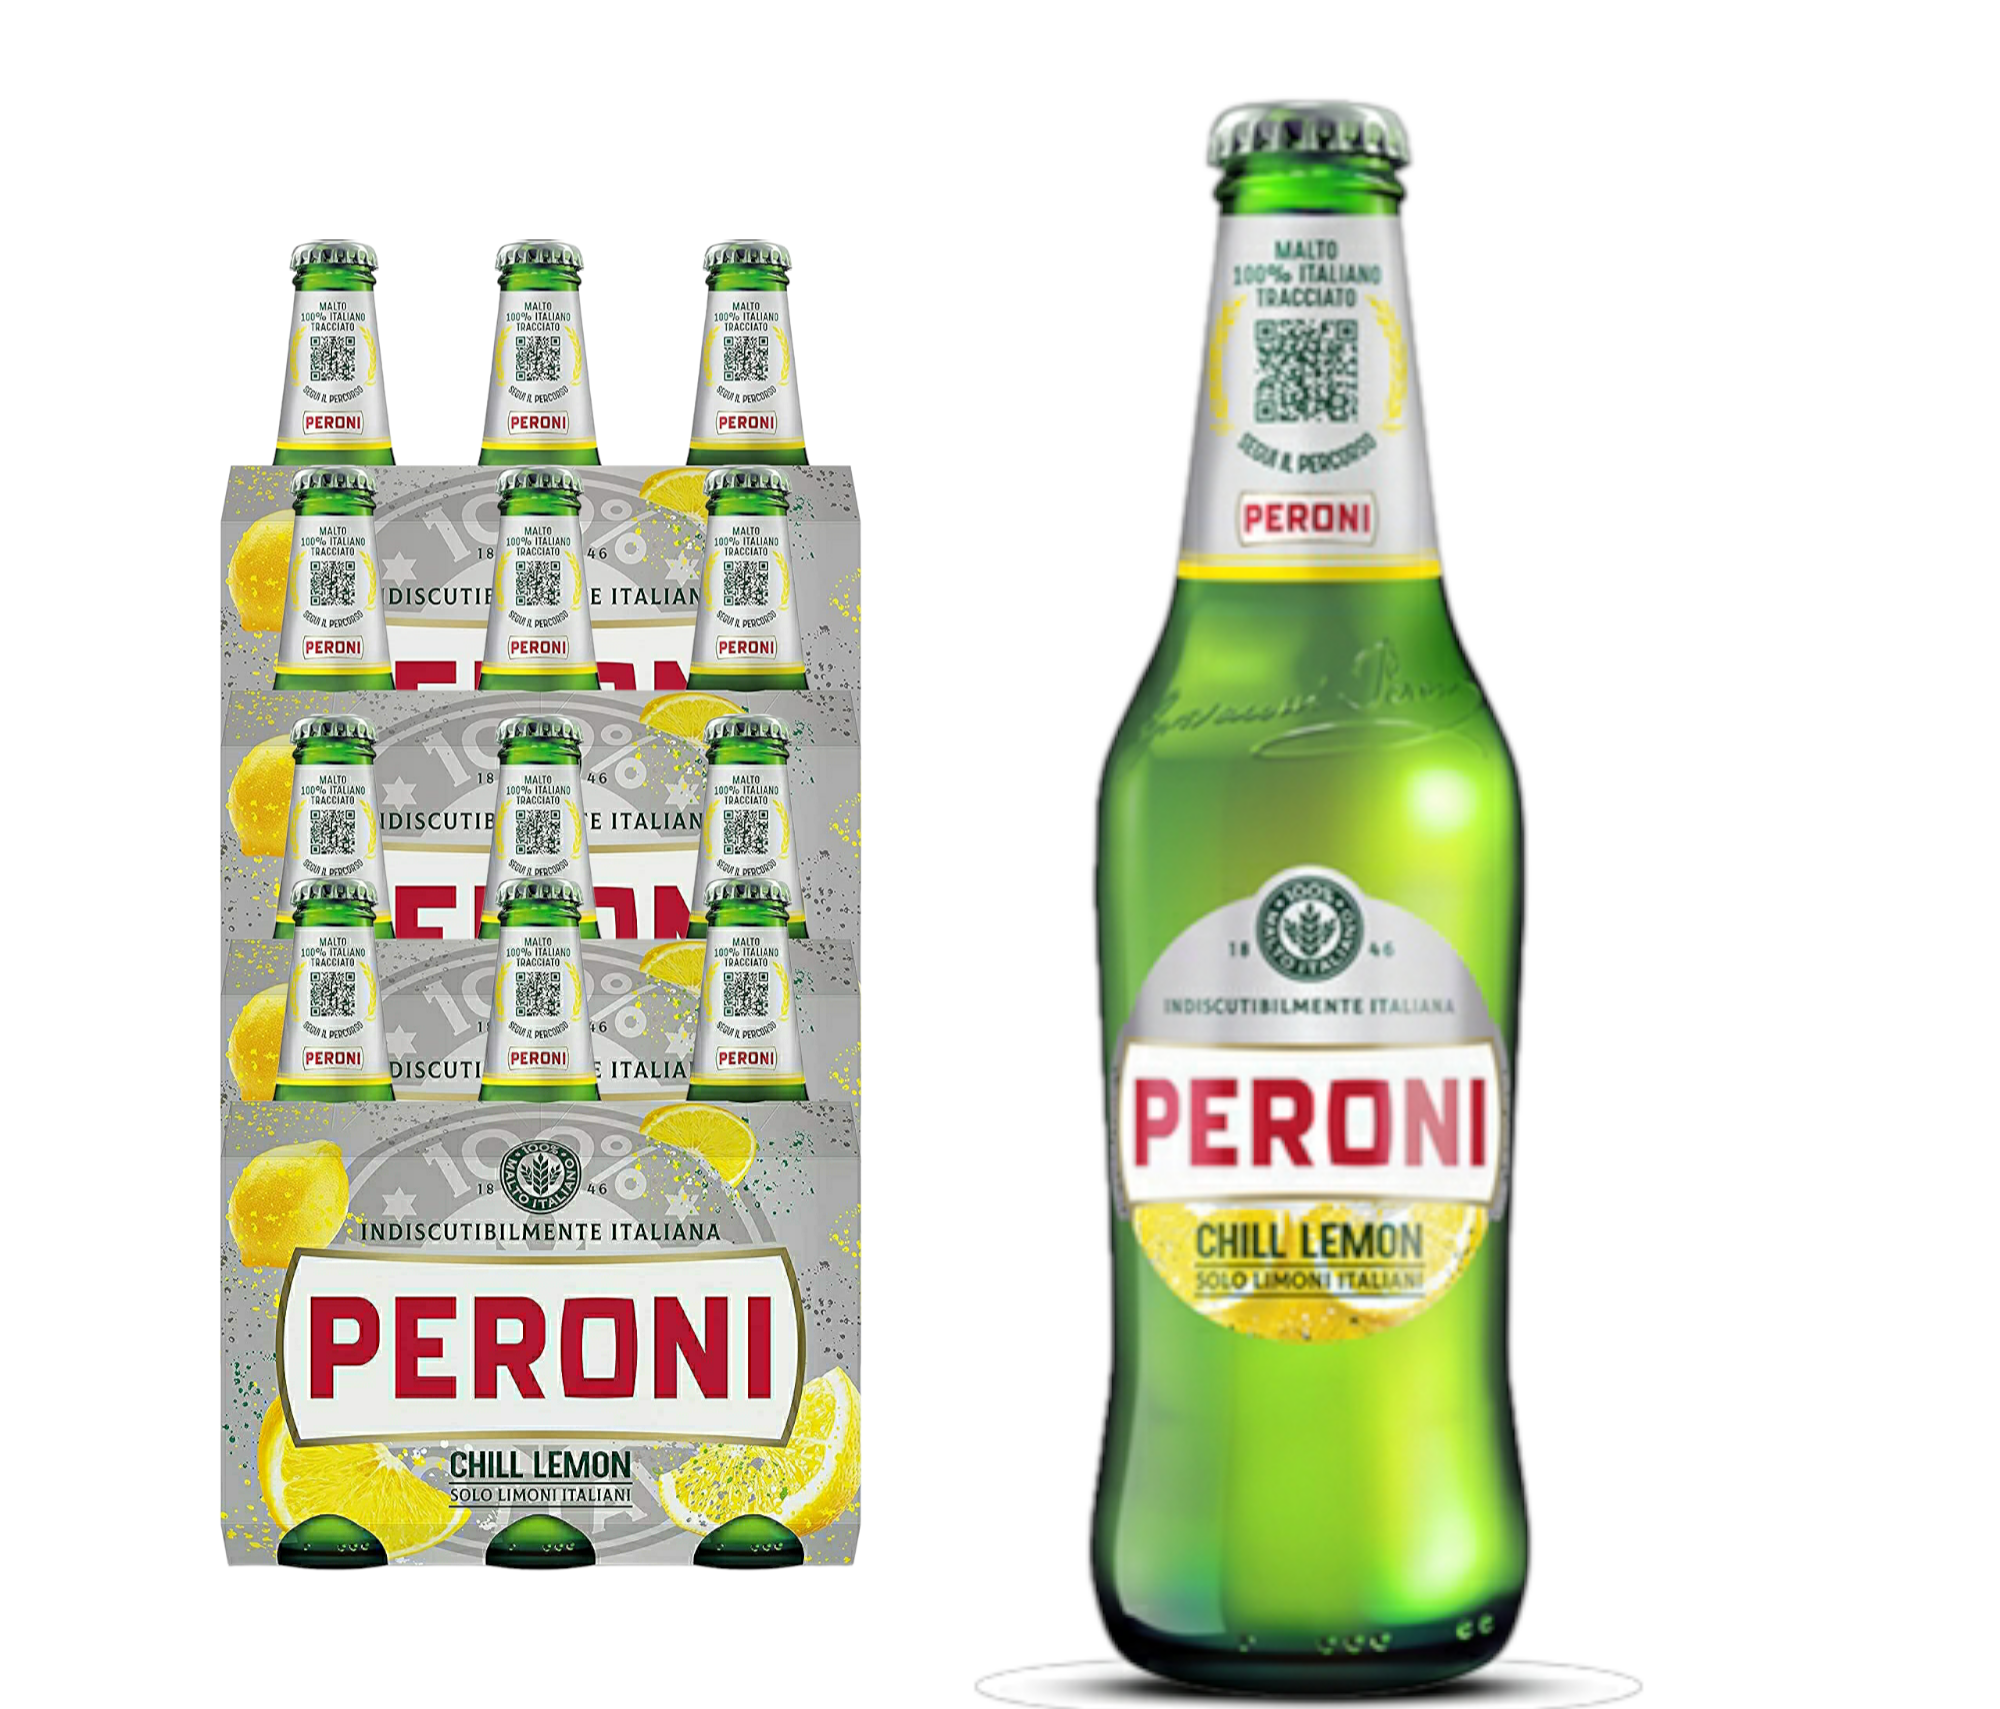 Peroni Bier Chill Lemon 0,33l- Radler aus Italien mit 2% Vol.